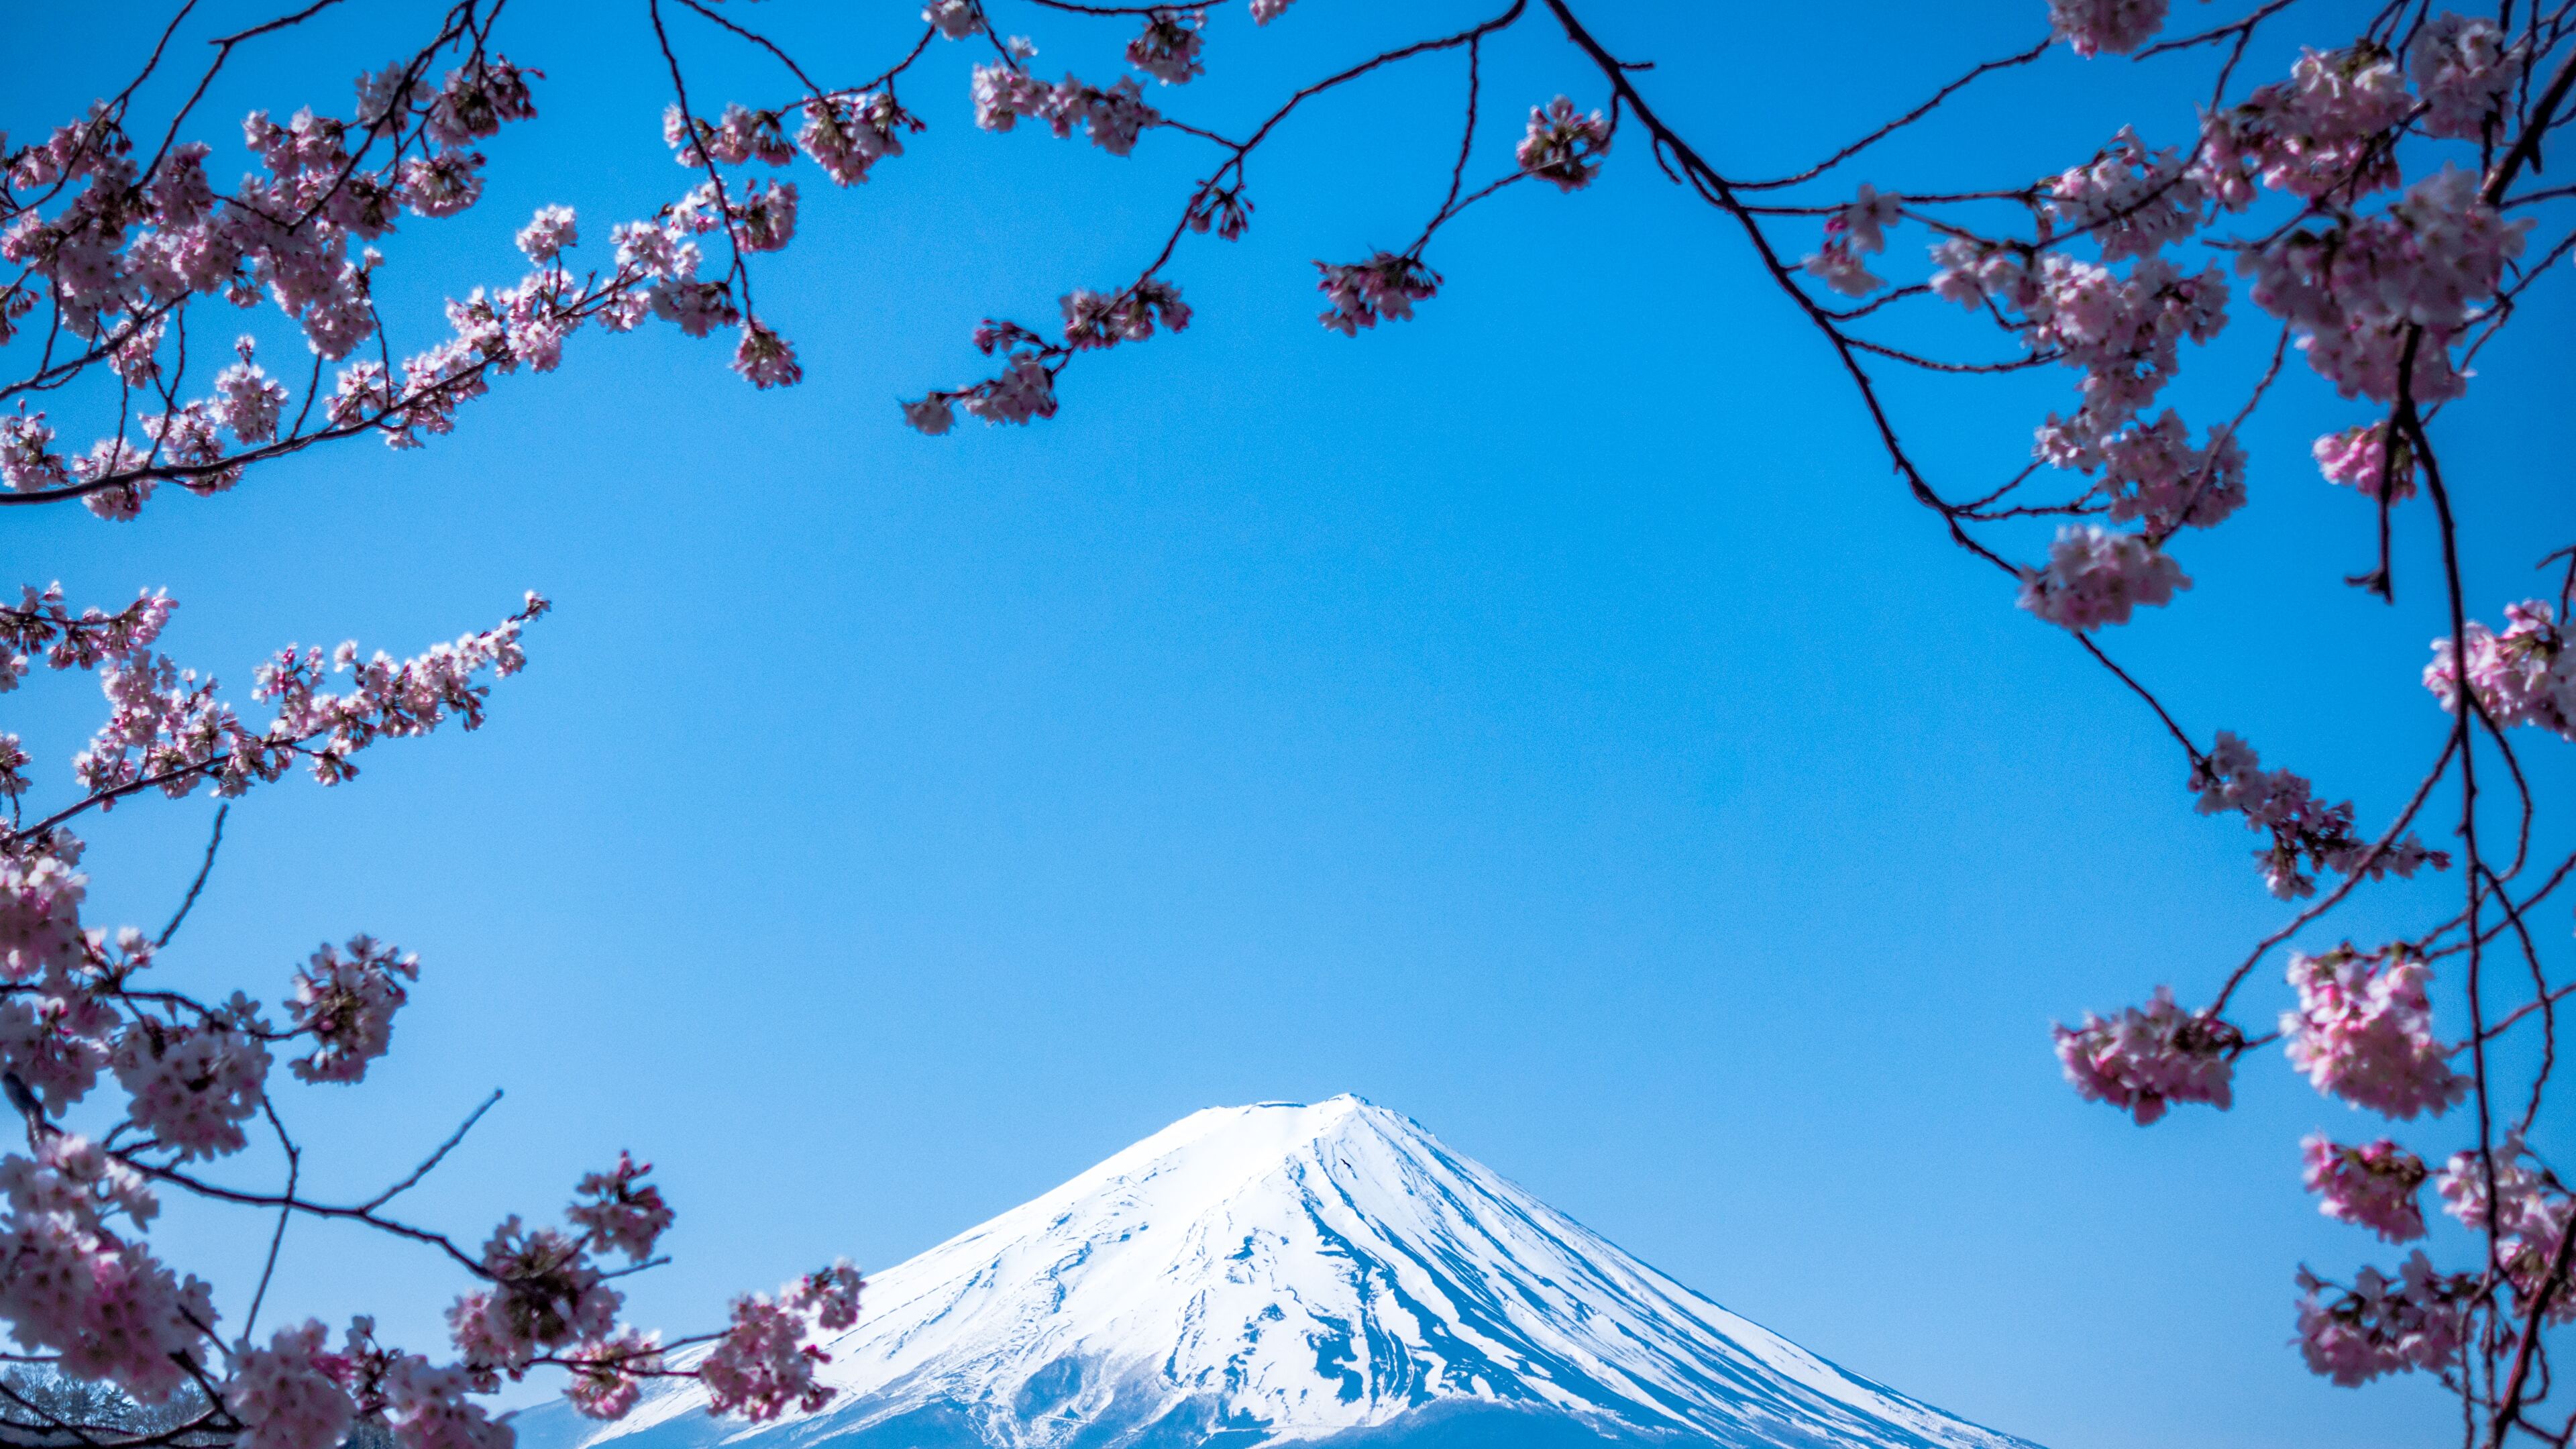 General 3840x2160 Mount Fuji snow cherry blossom clear sky